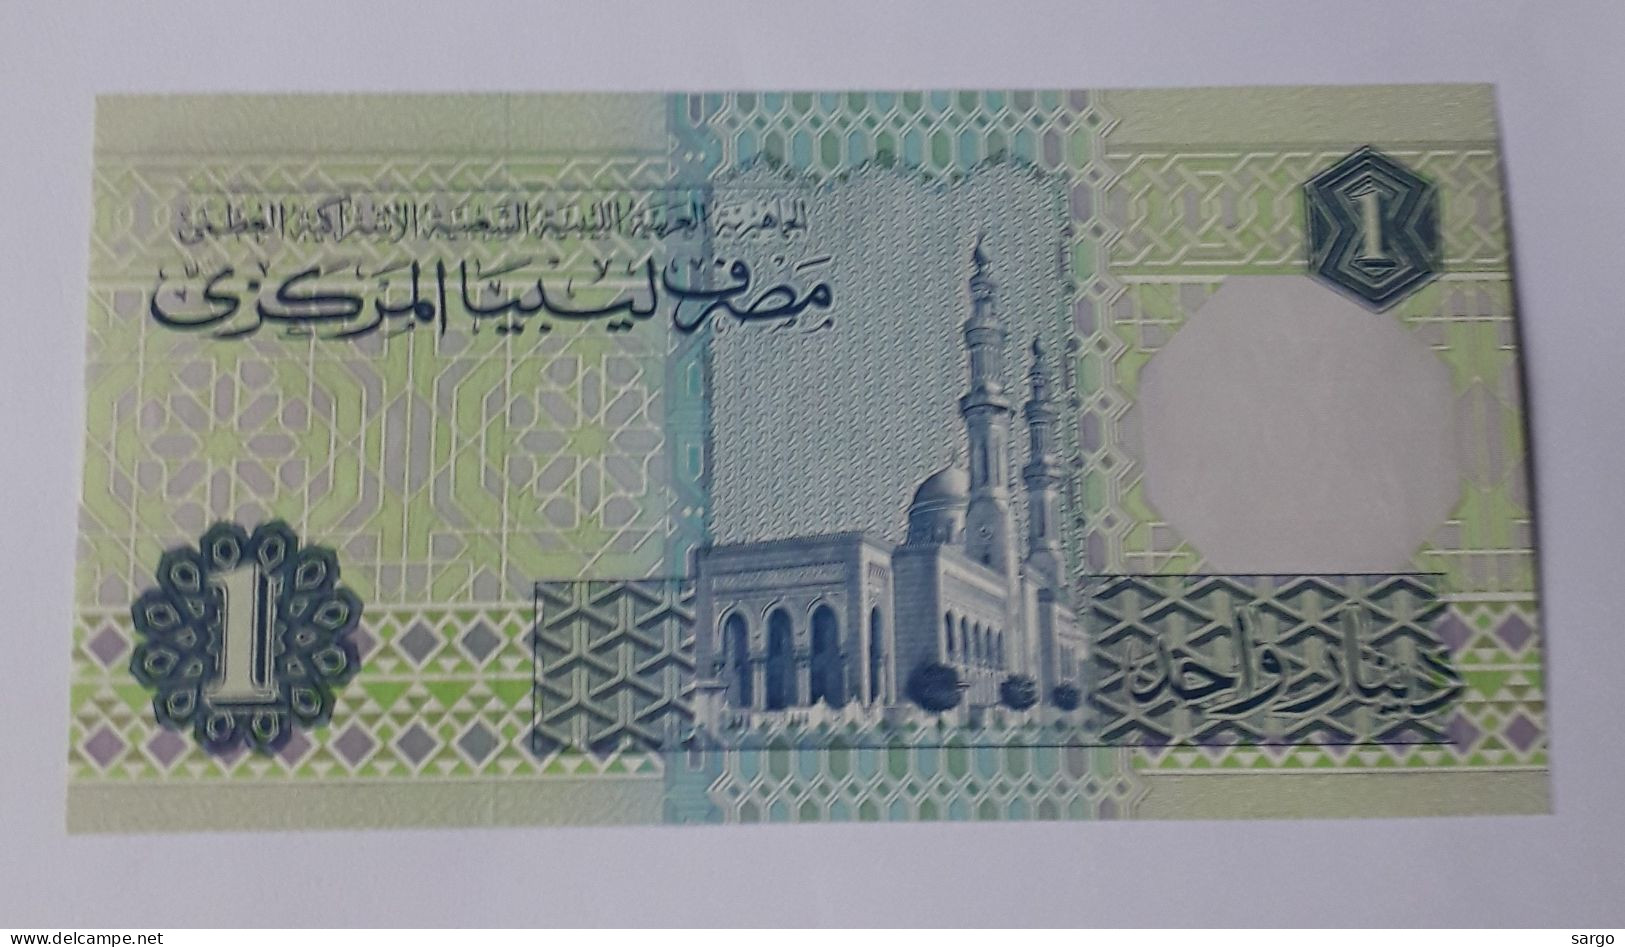 LIBYA - 1 DINAR - 1991 -  P 59b  - UNC - BANKNOTES - PAPER MONEY - CARTAMONETA - - Libië